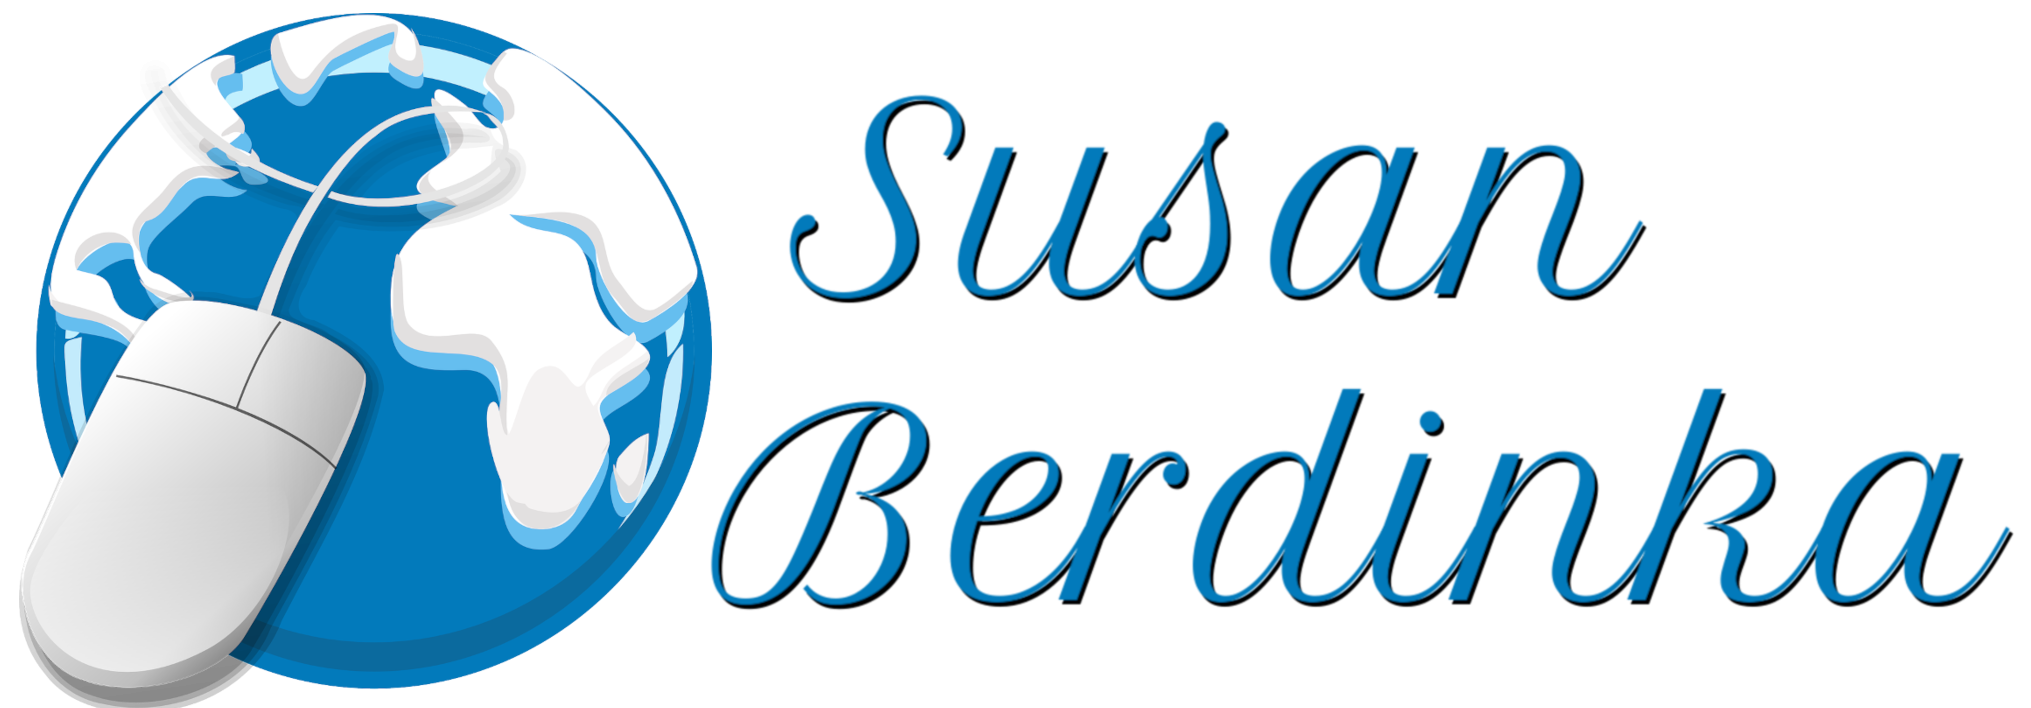 Susan Berdinka logo